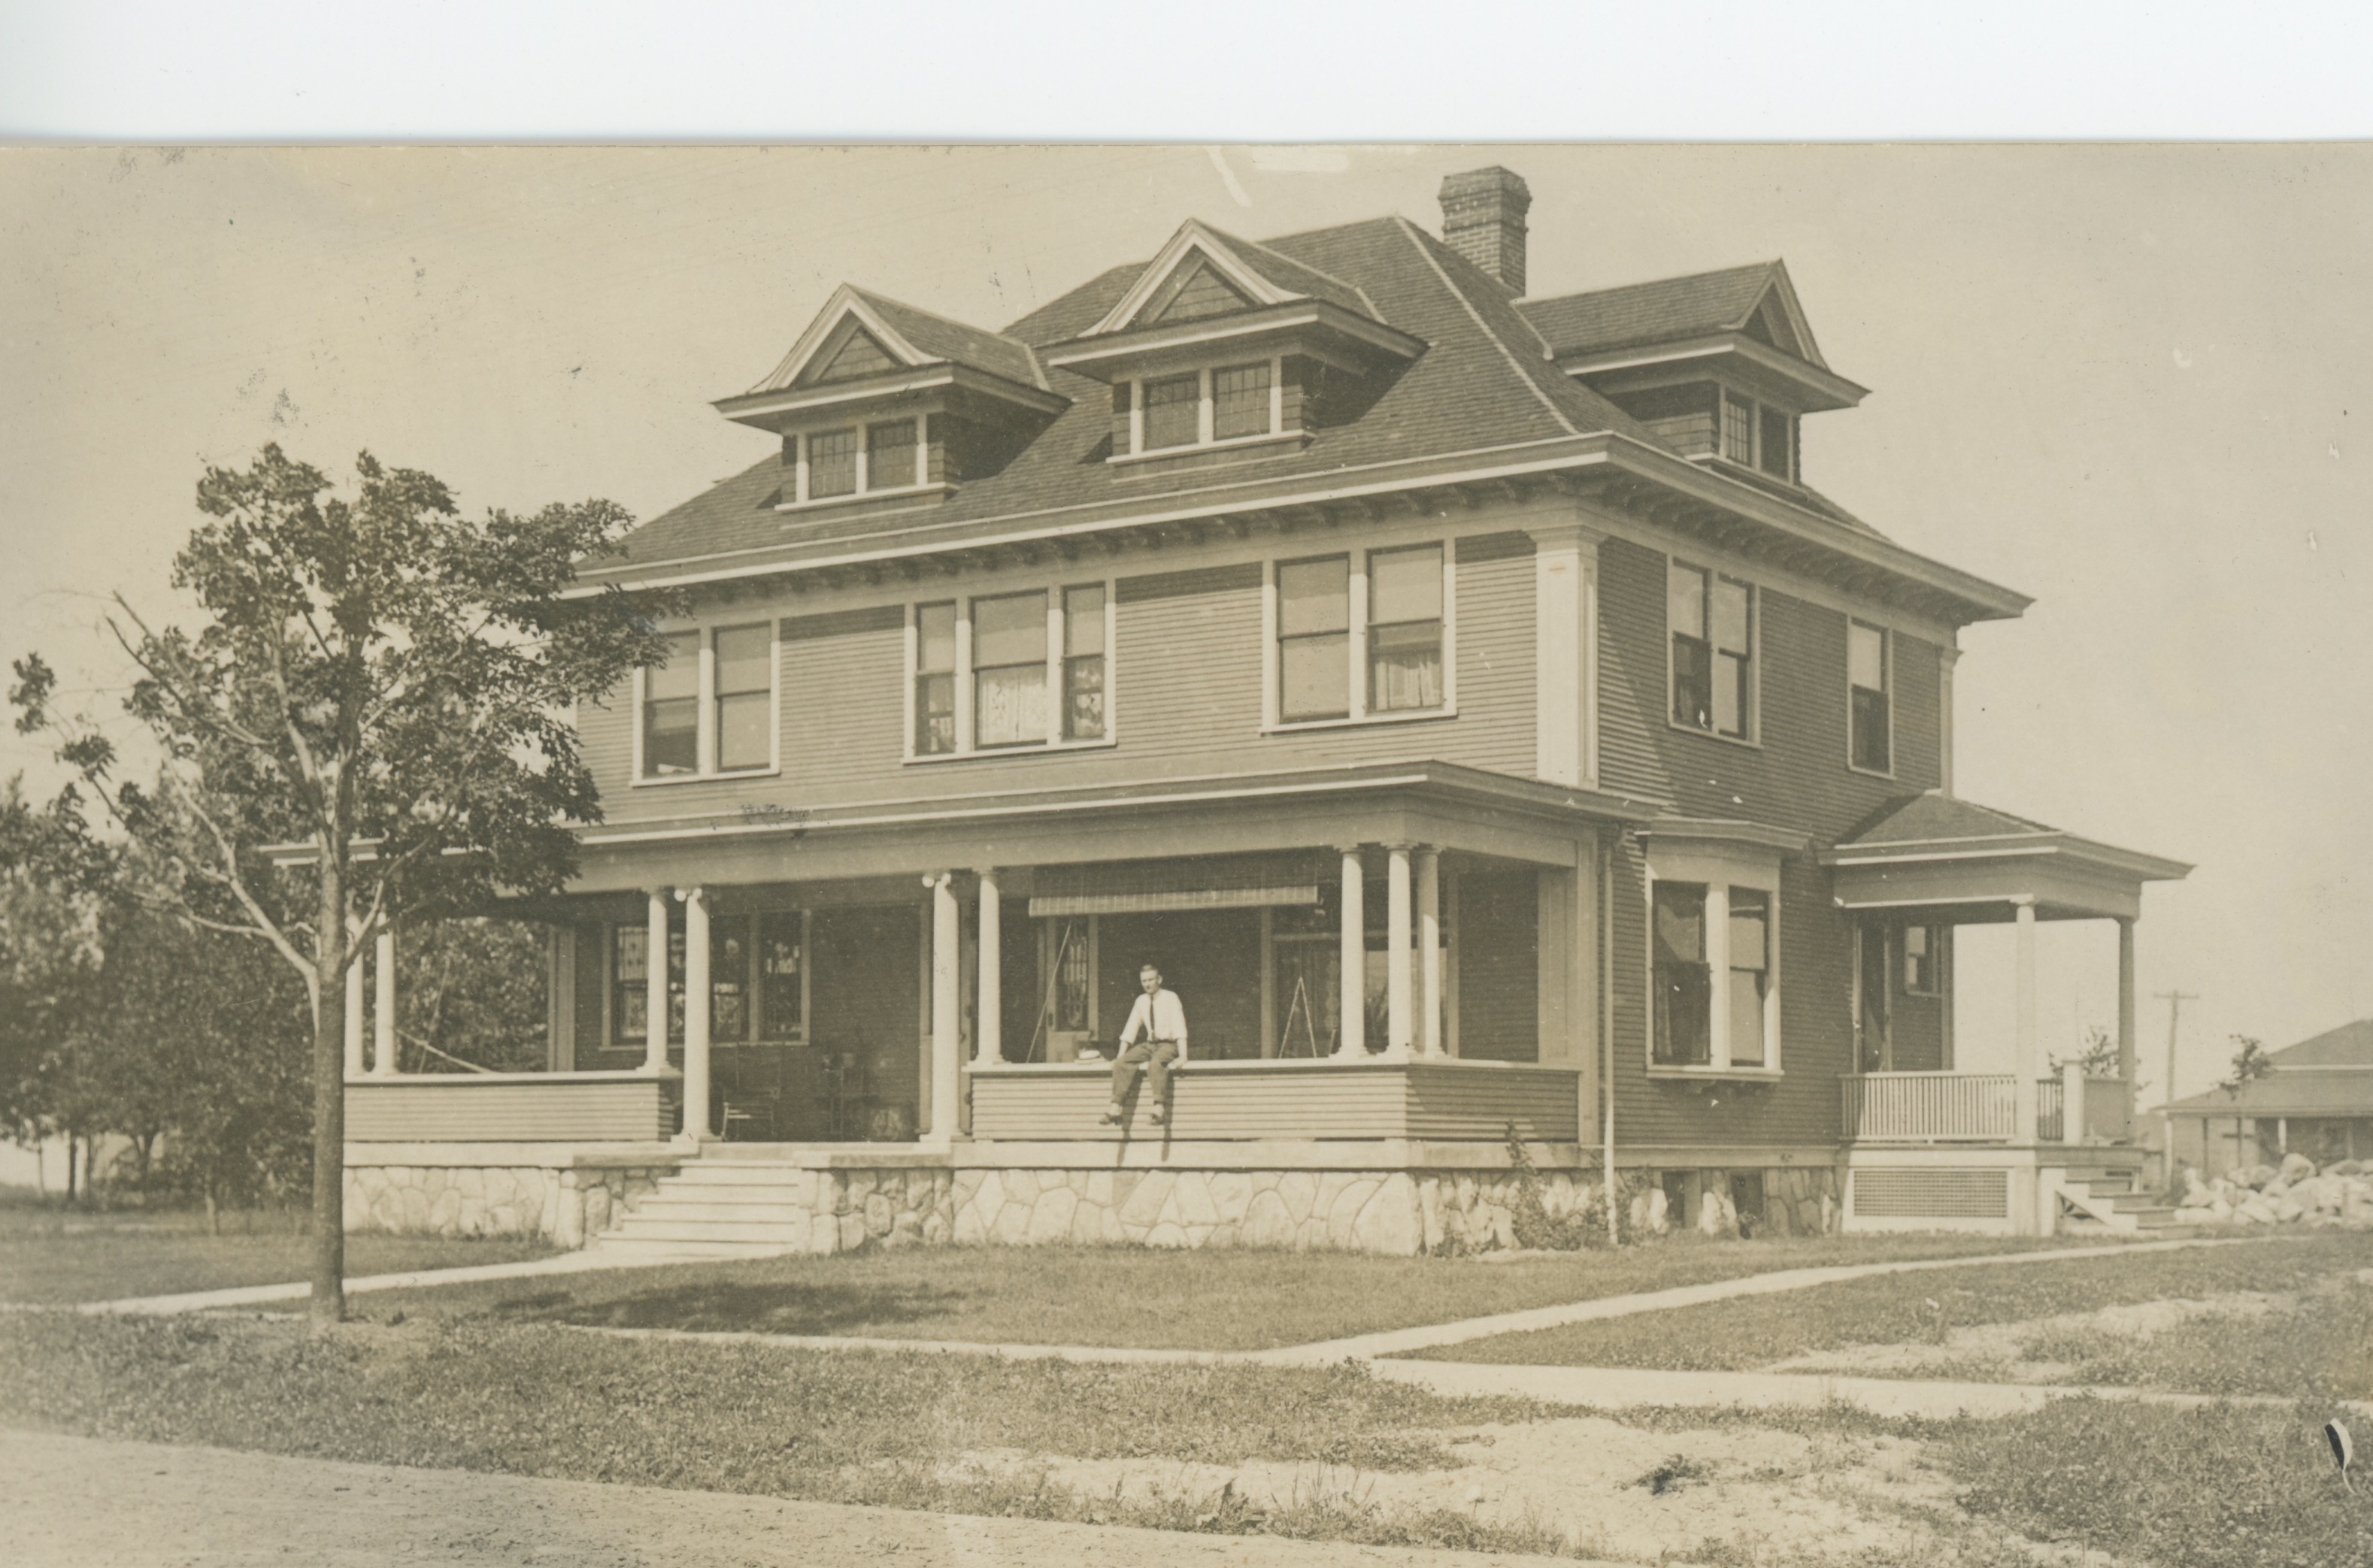 History of historic Mack house.